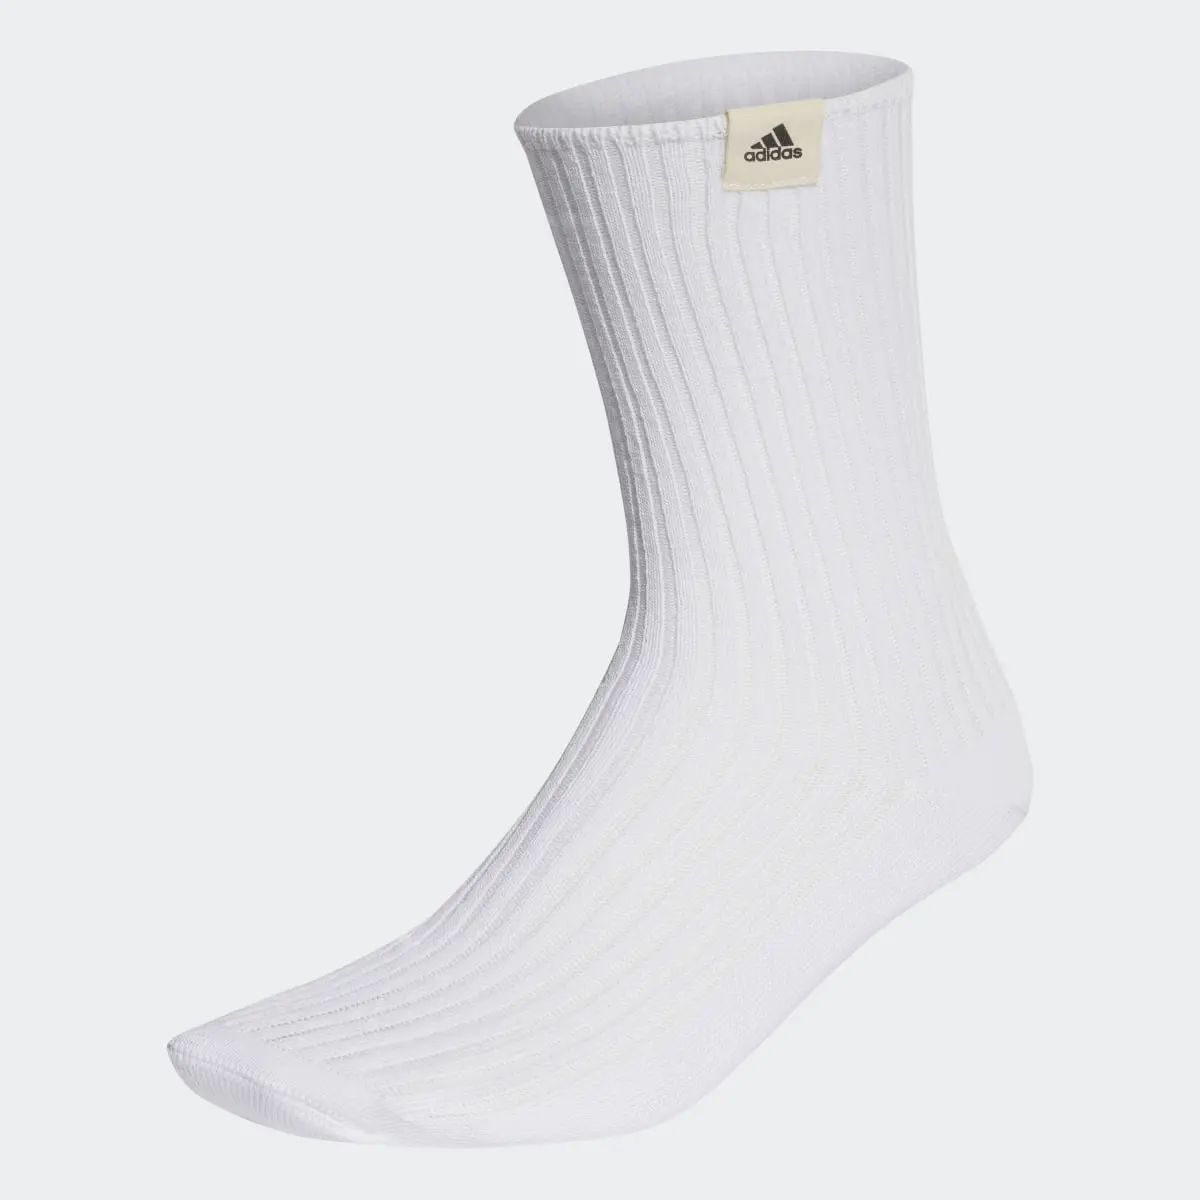 Adidas Best Label Socks 1 Pair. 1